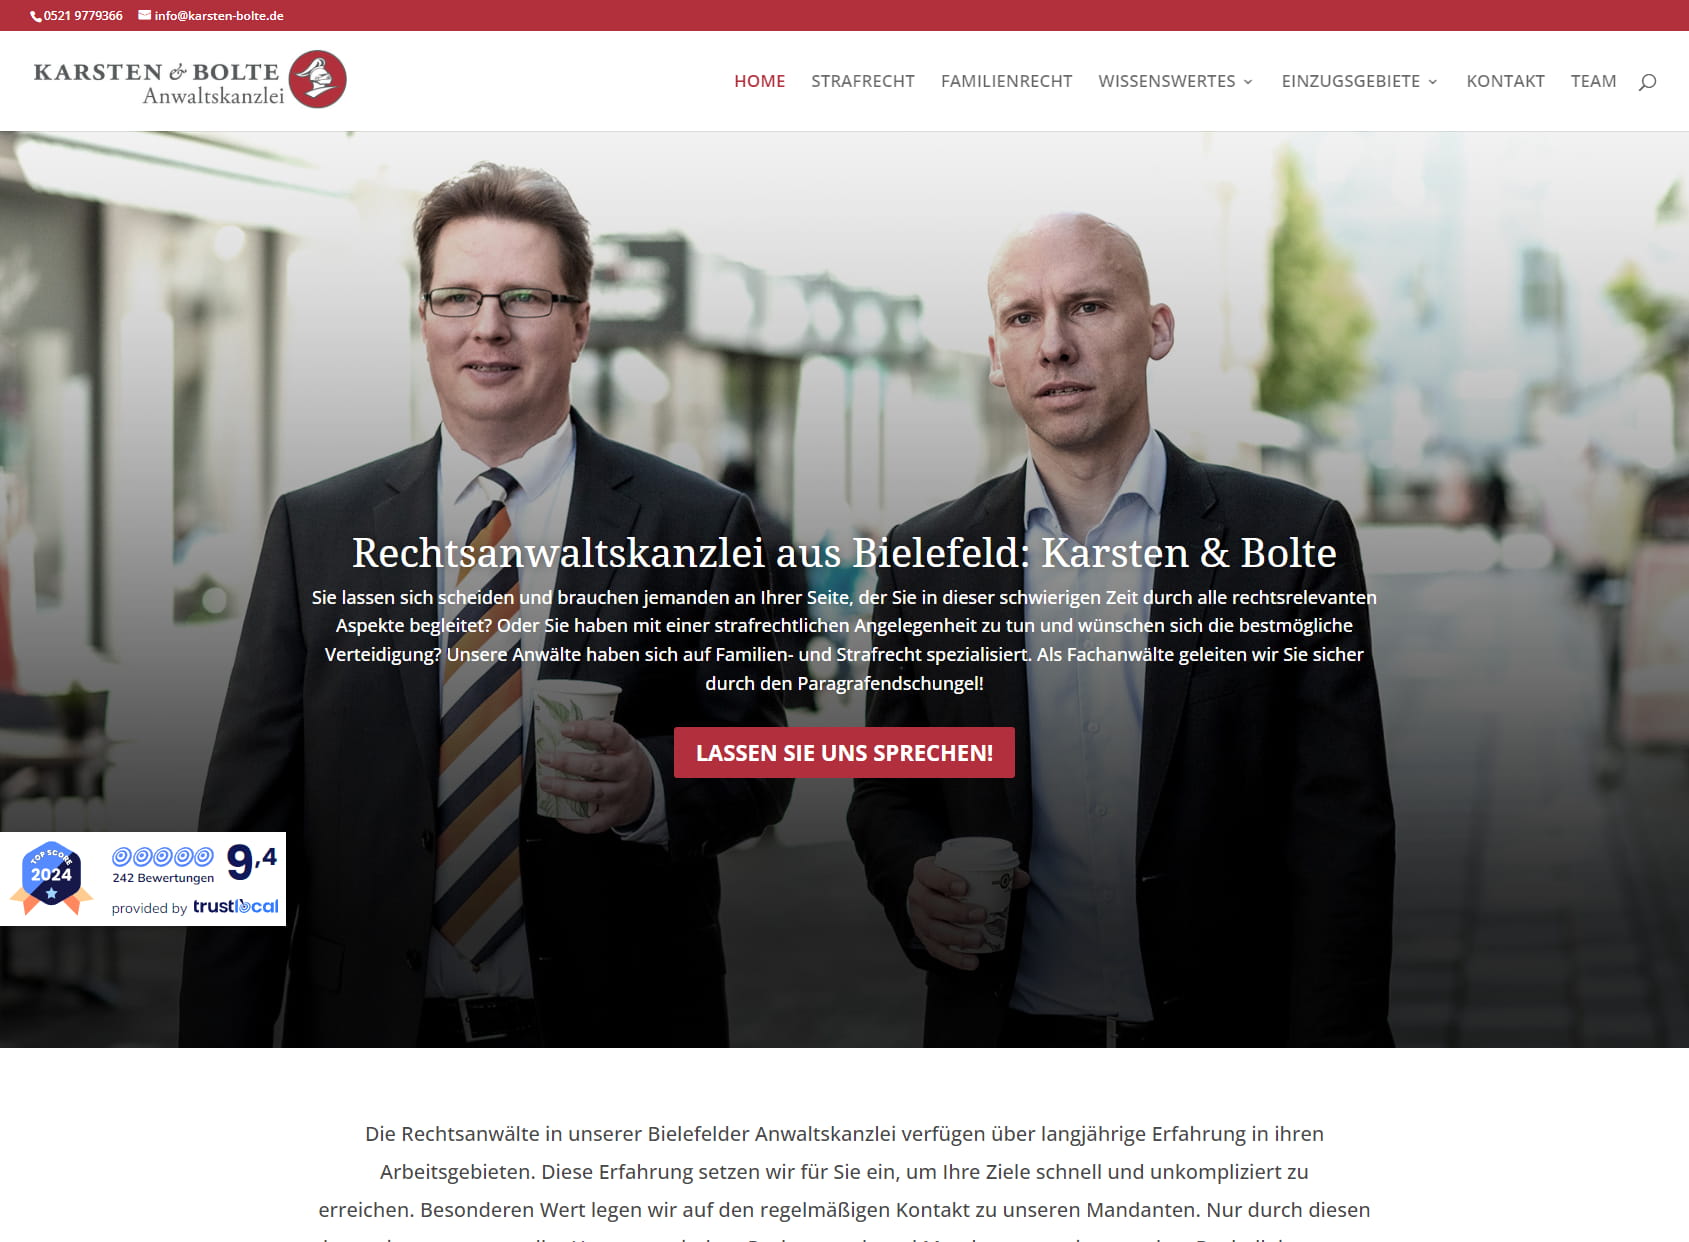 Karsten & Bolte Rechtsanwaltskanzlei Bielefeld